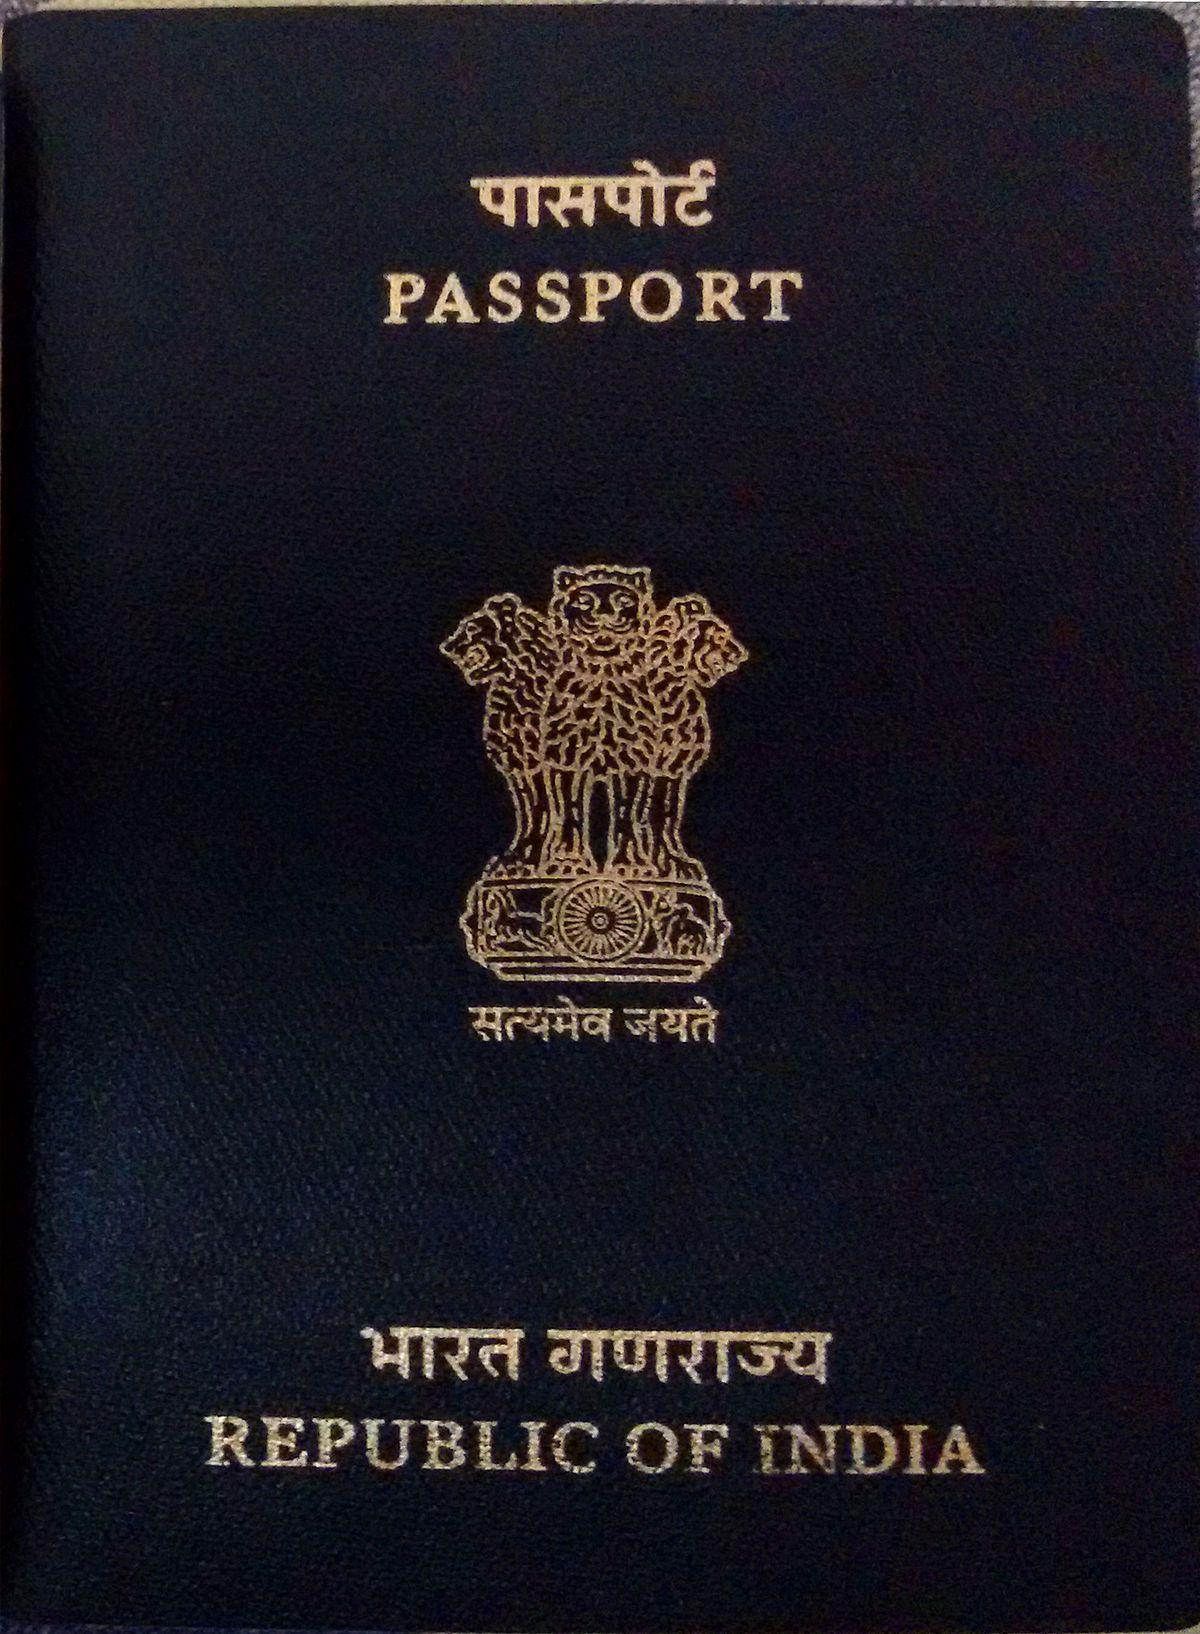 Passport Logo - Indian passport